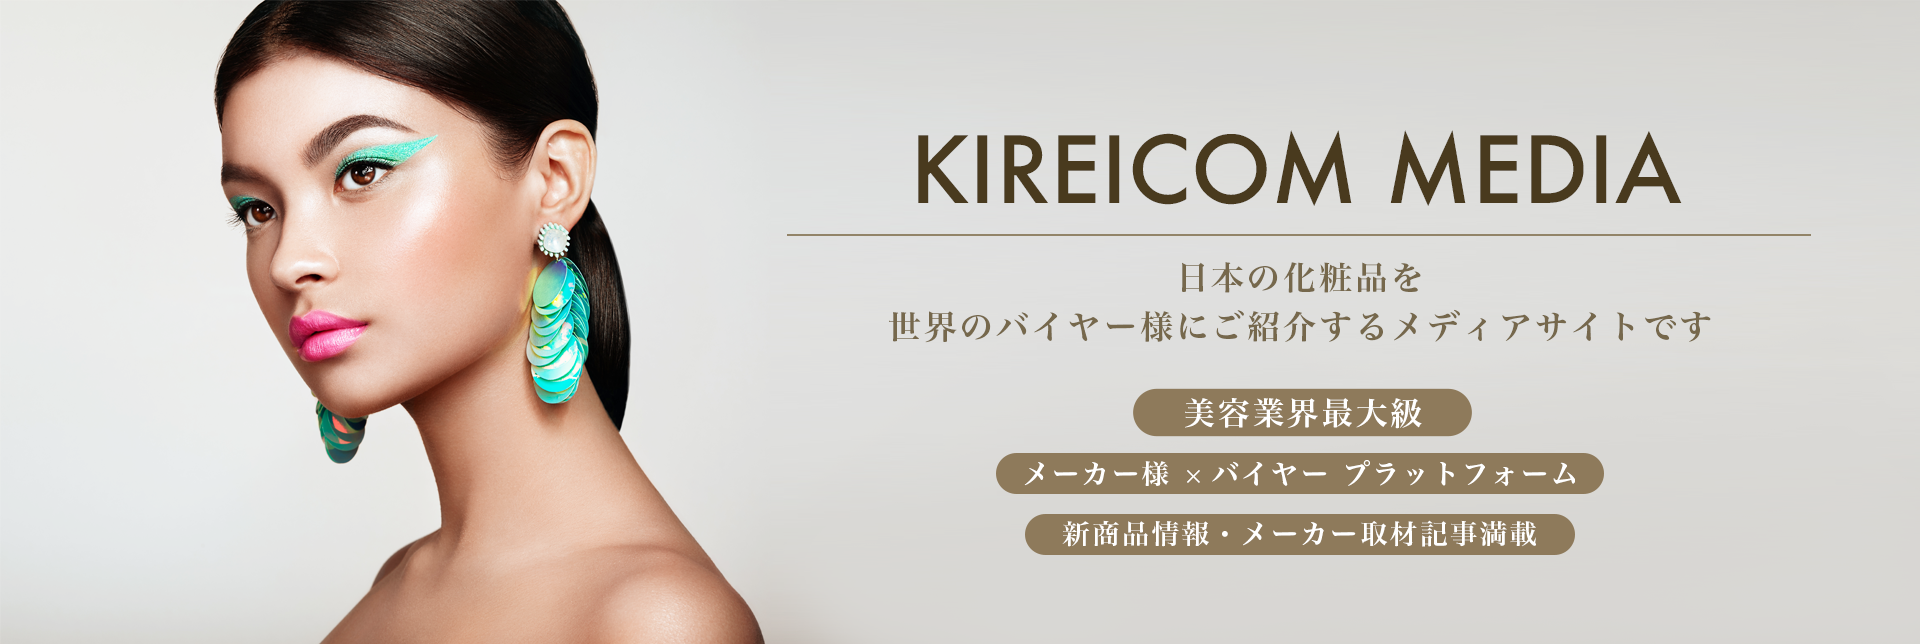 KIREICOM MEDIA 日本の化粧品を世界のバイヤー様にご紹介するメディアサイトです